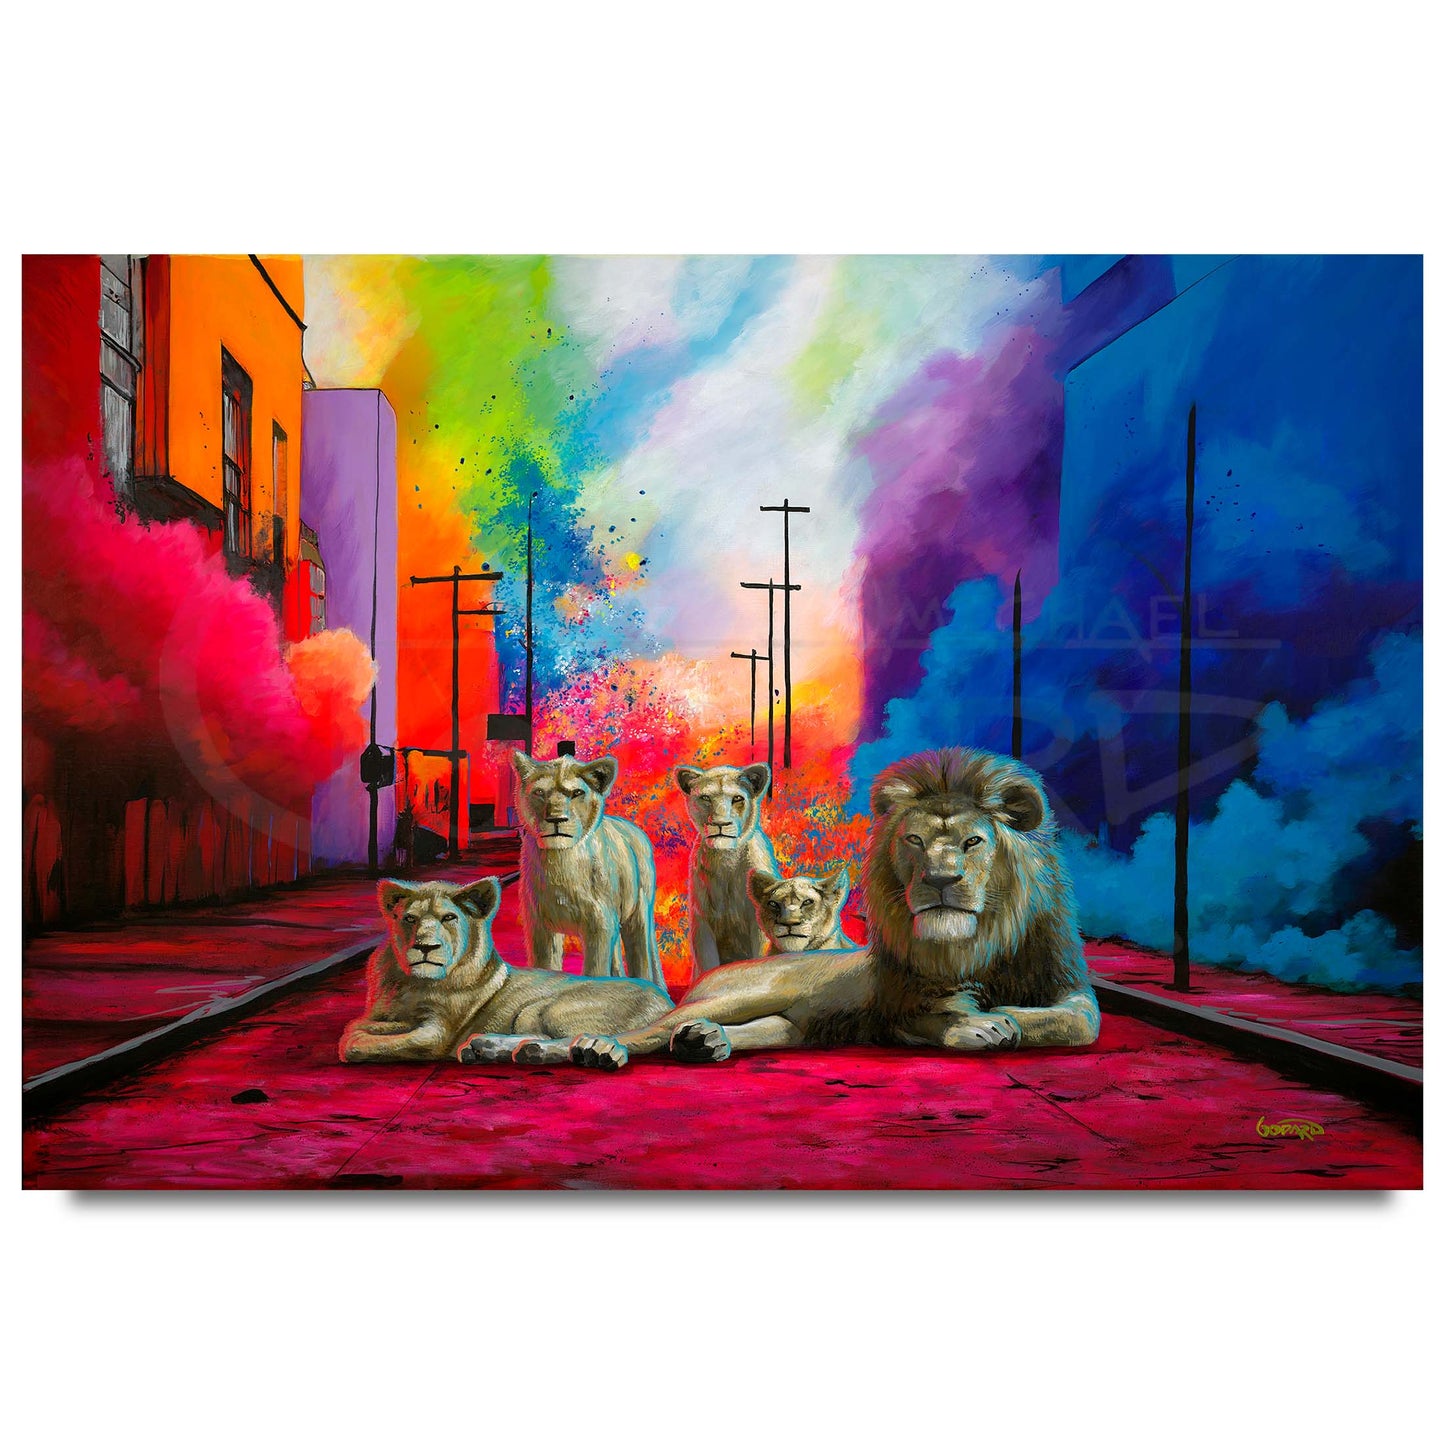 Michael Godard "Pride" Limited Edition Canvas Giclee